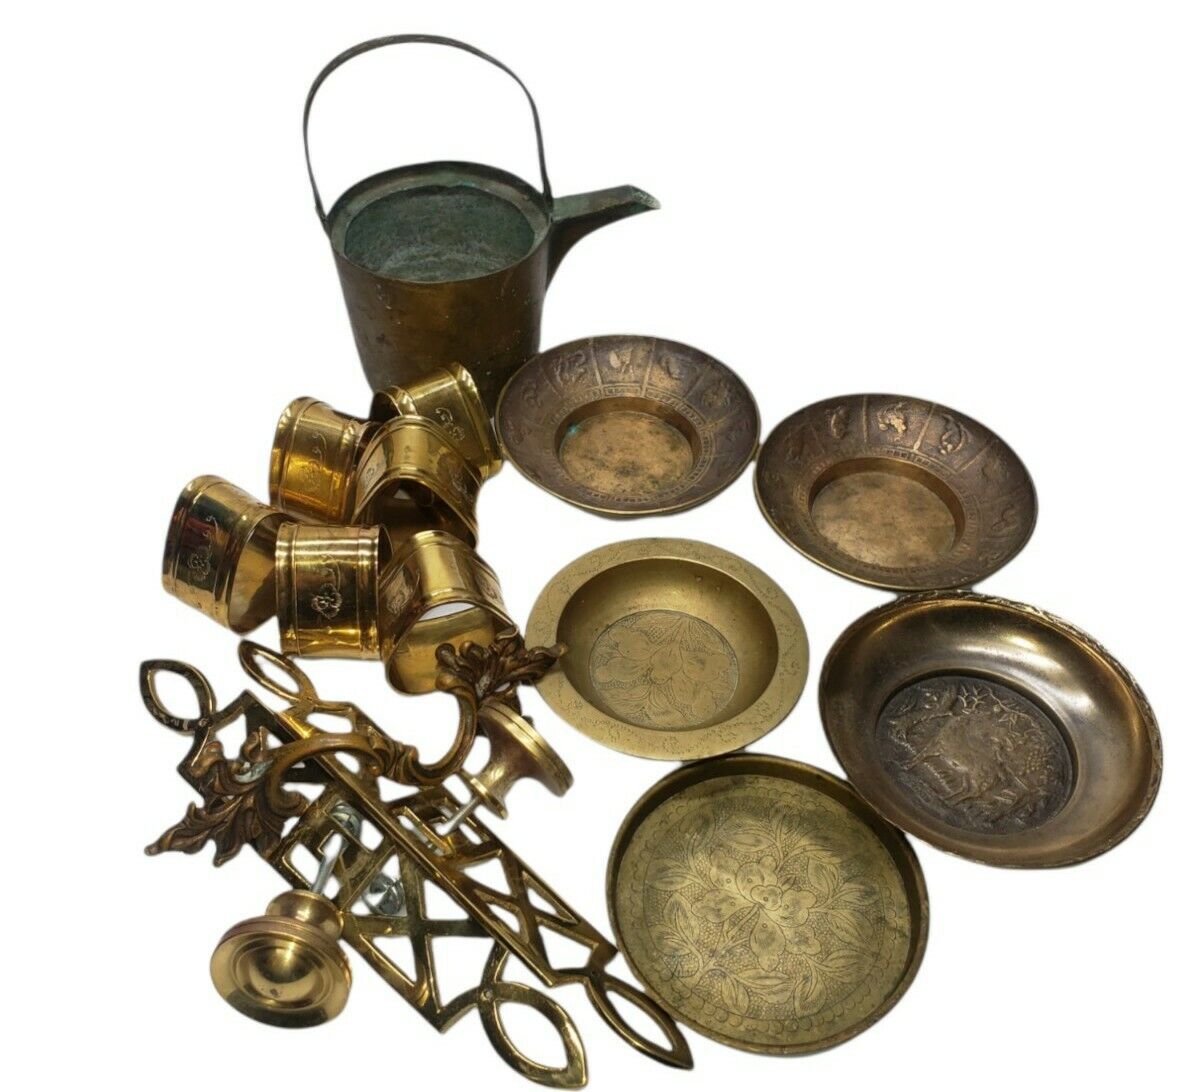 Vintage Antique Brass Lot Collectibles, Ashtray, Napkin Holder, Plates